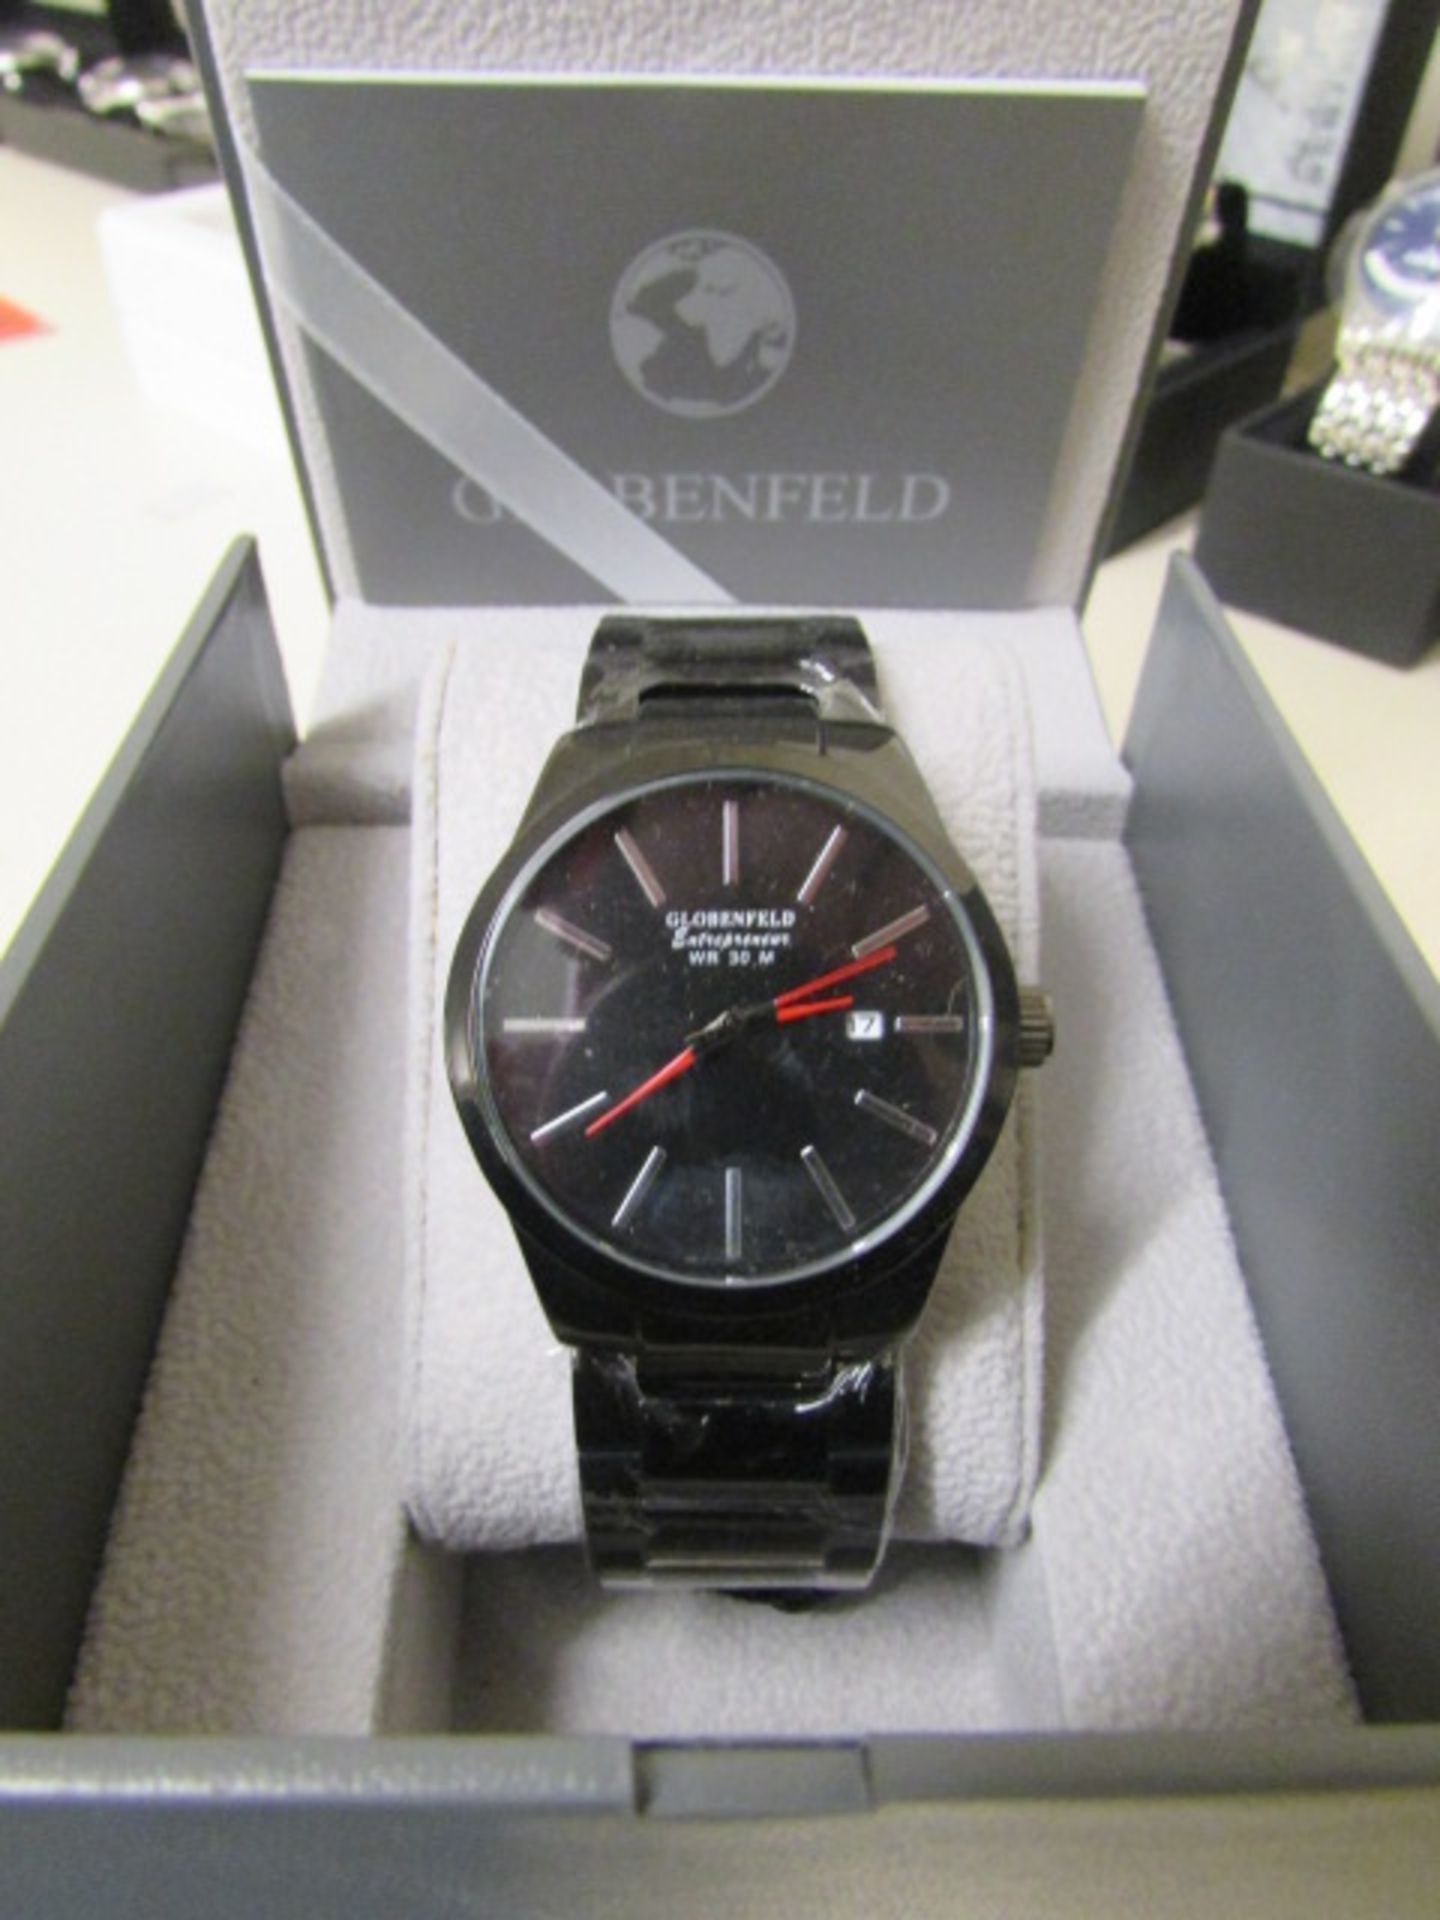 Globenfeld Entrepreneur Elegant Men’S Dress Watch. Limited Edition. Slimline Style With Black - Image 2 of 2